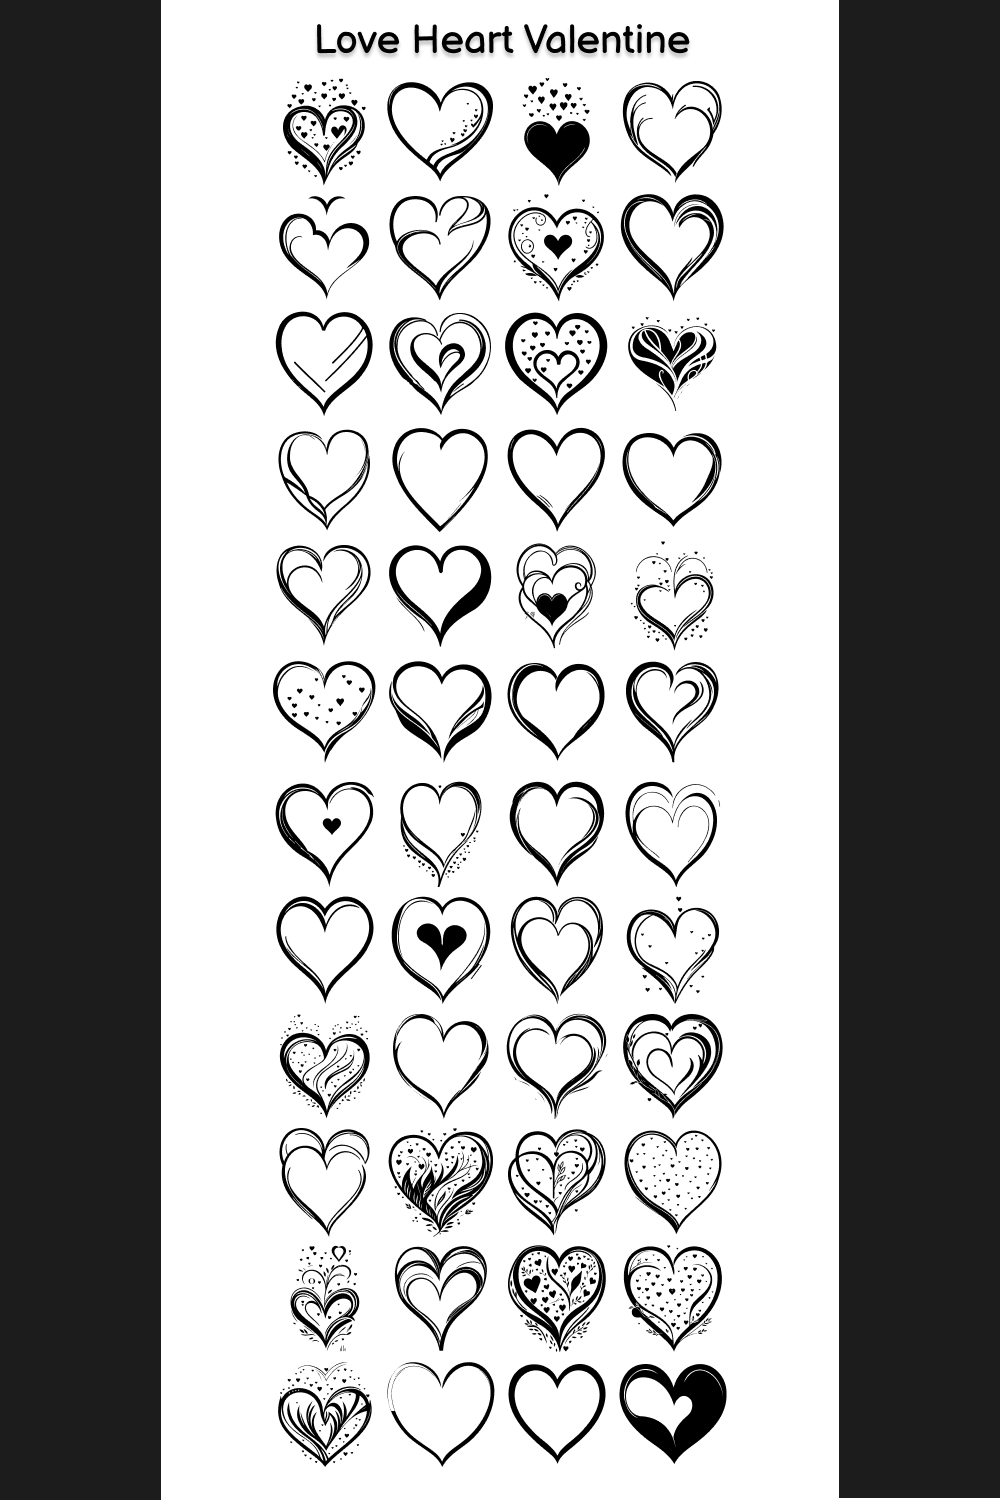 Love Heart Valentine Element Draw Black pinterest preview image.